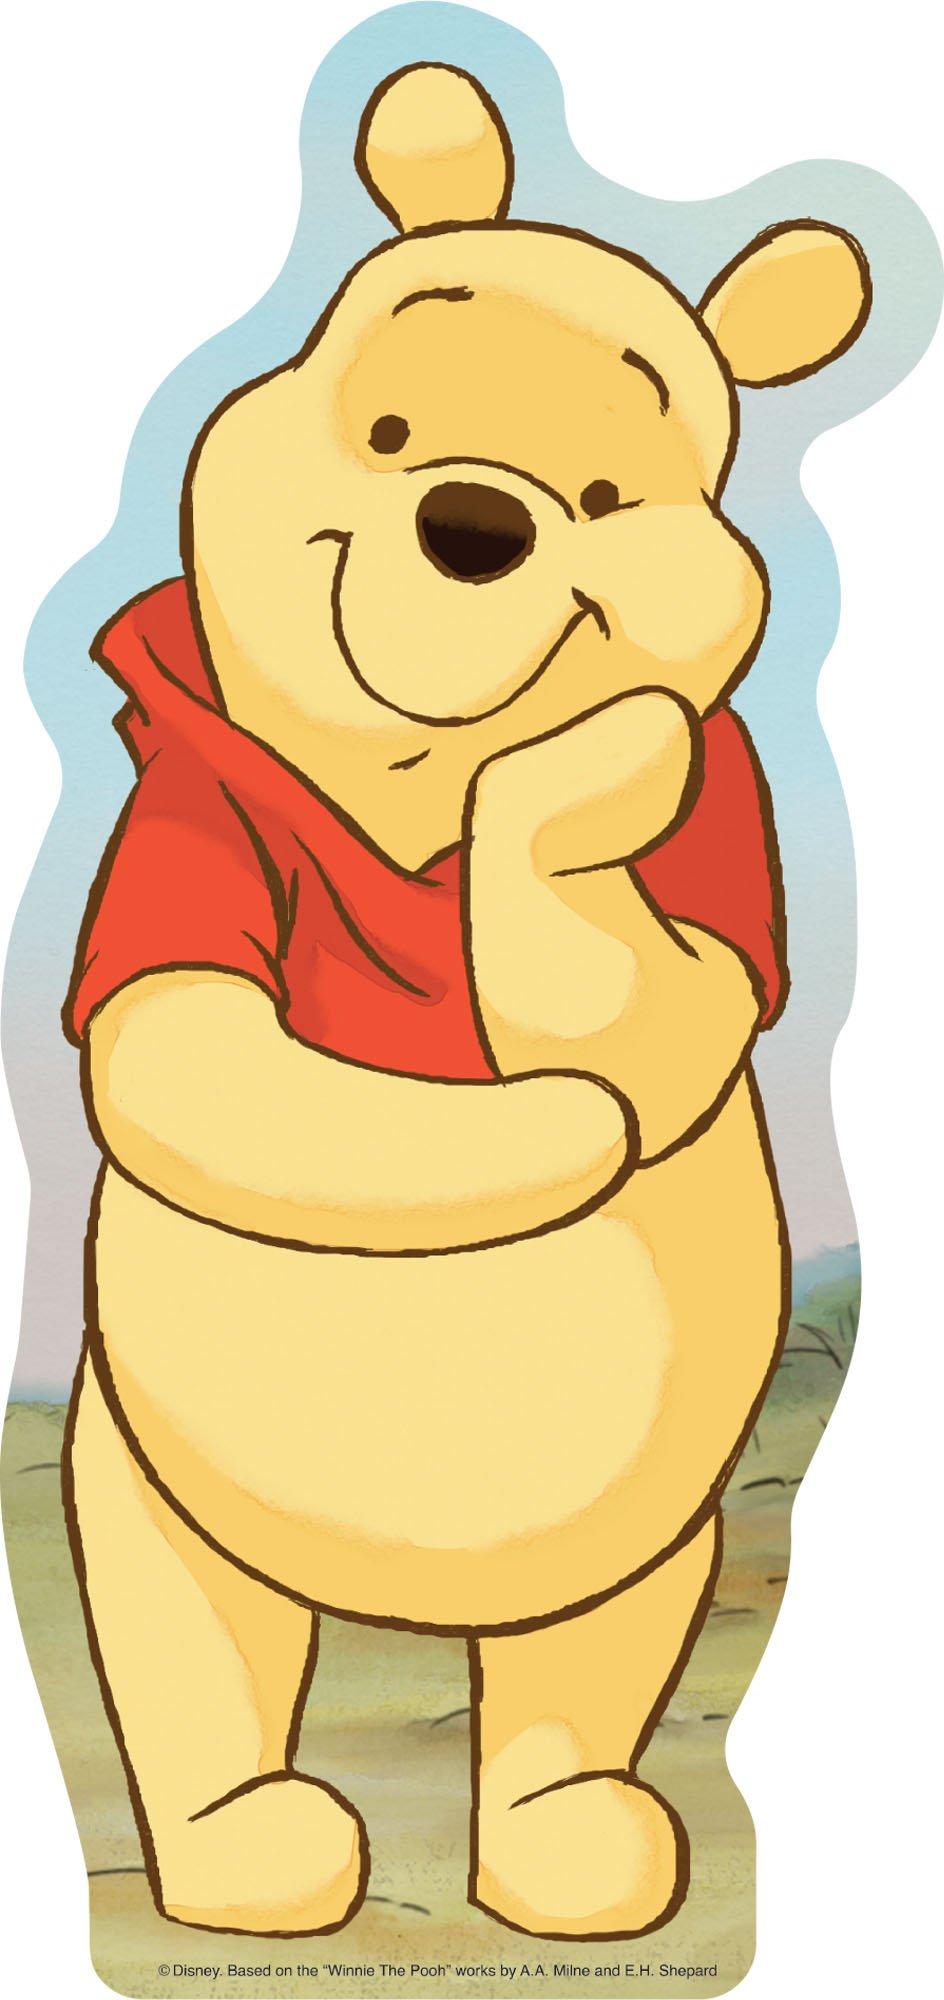 Life-size Winnie the Pooh Cardboard Cutout